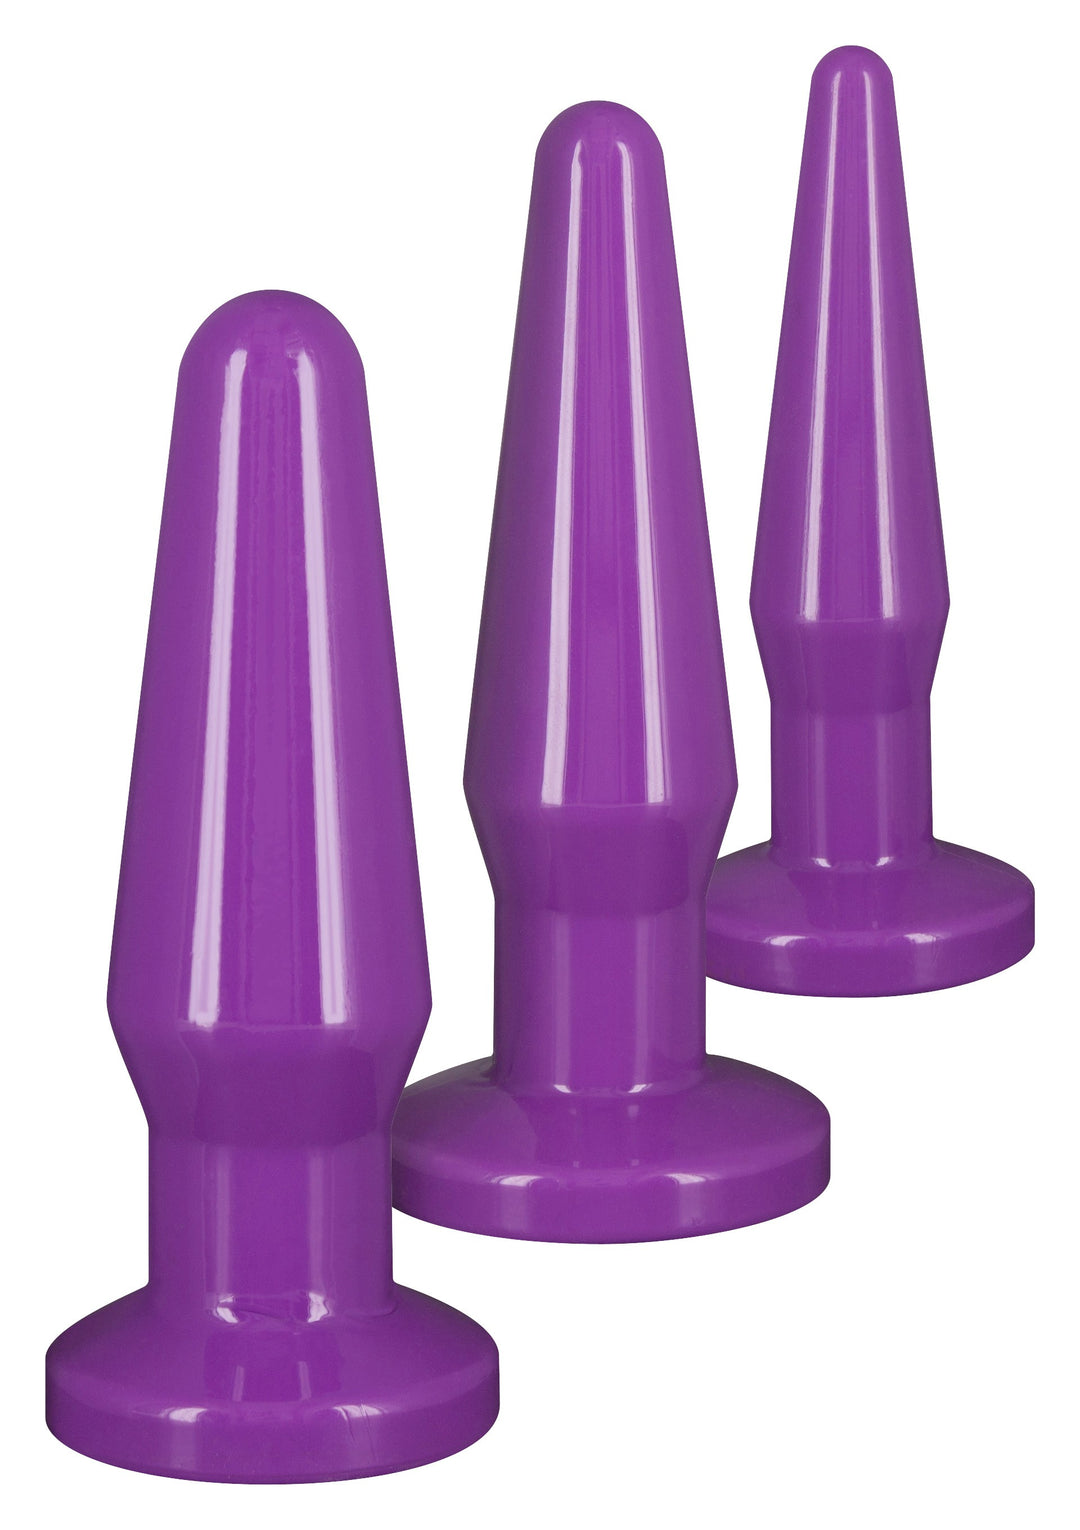 Anal dildo kit 3 pcs dildo anal butt plug set sex toys anal mini maxi purple